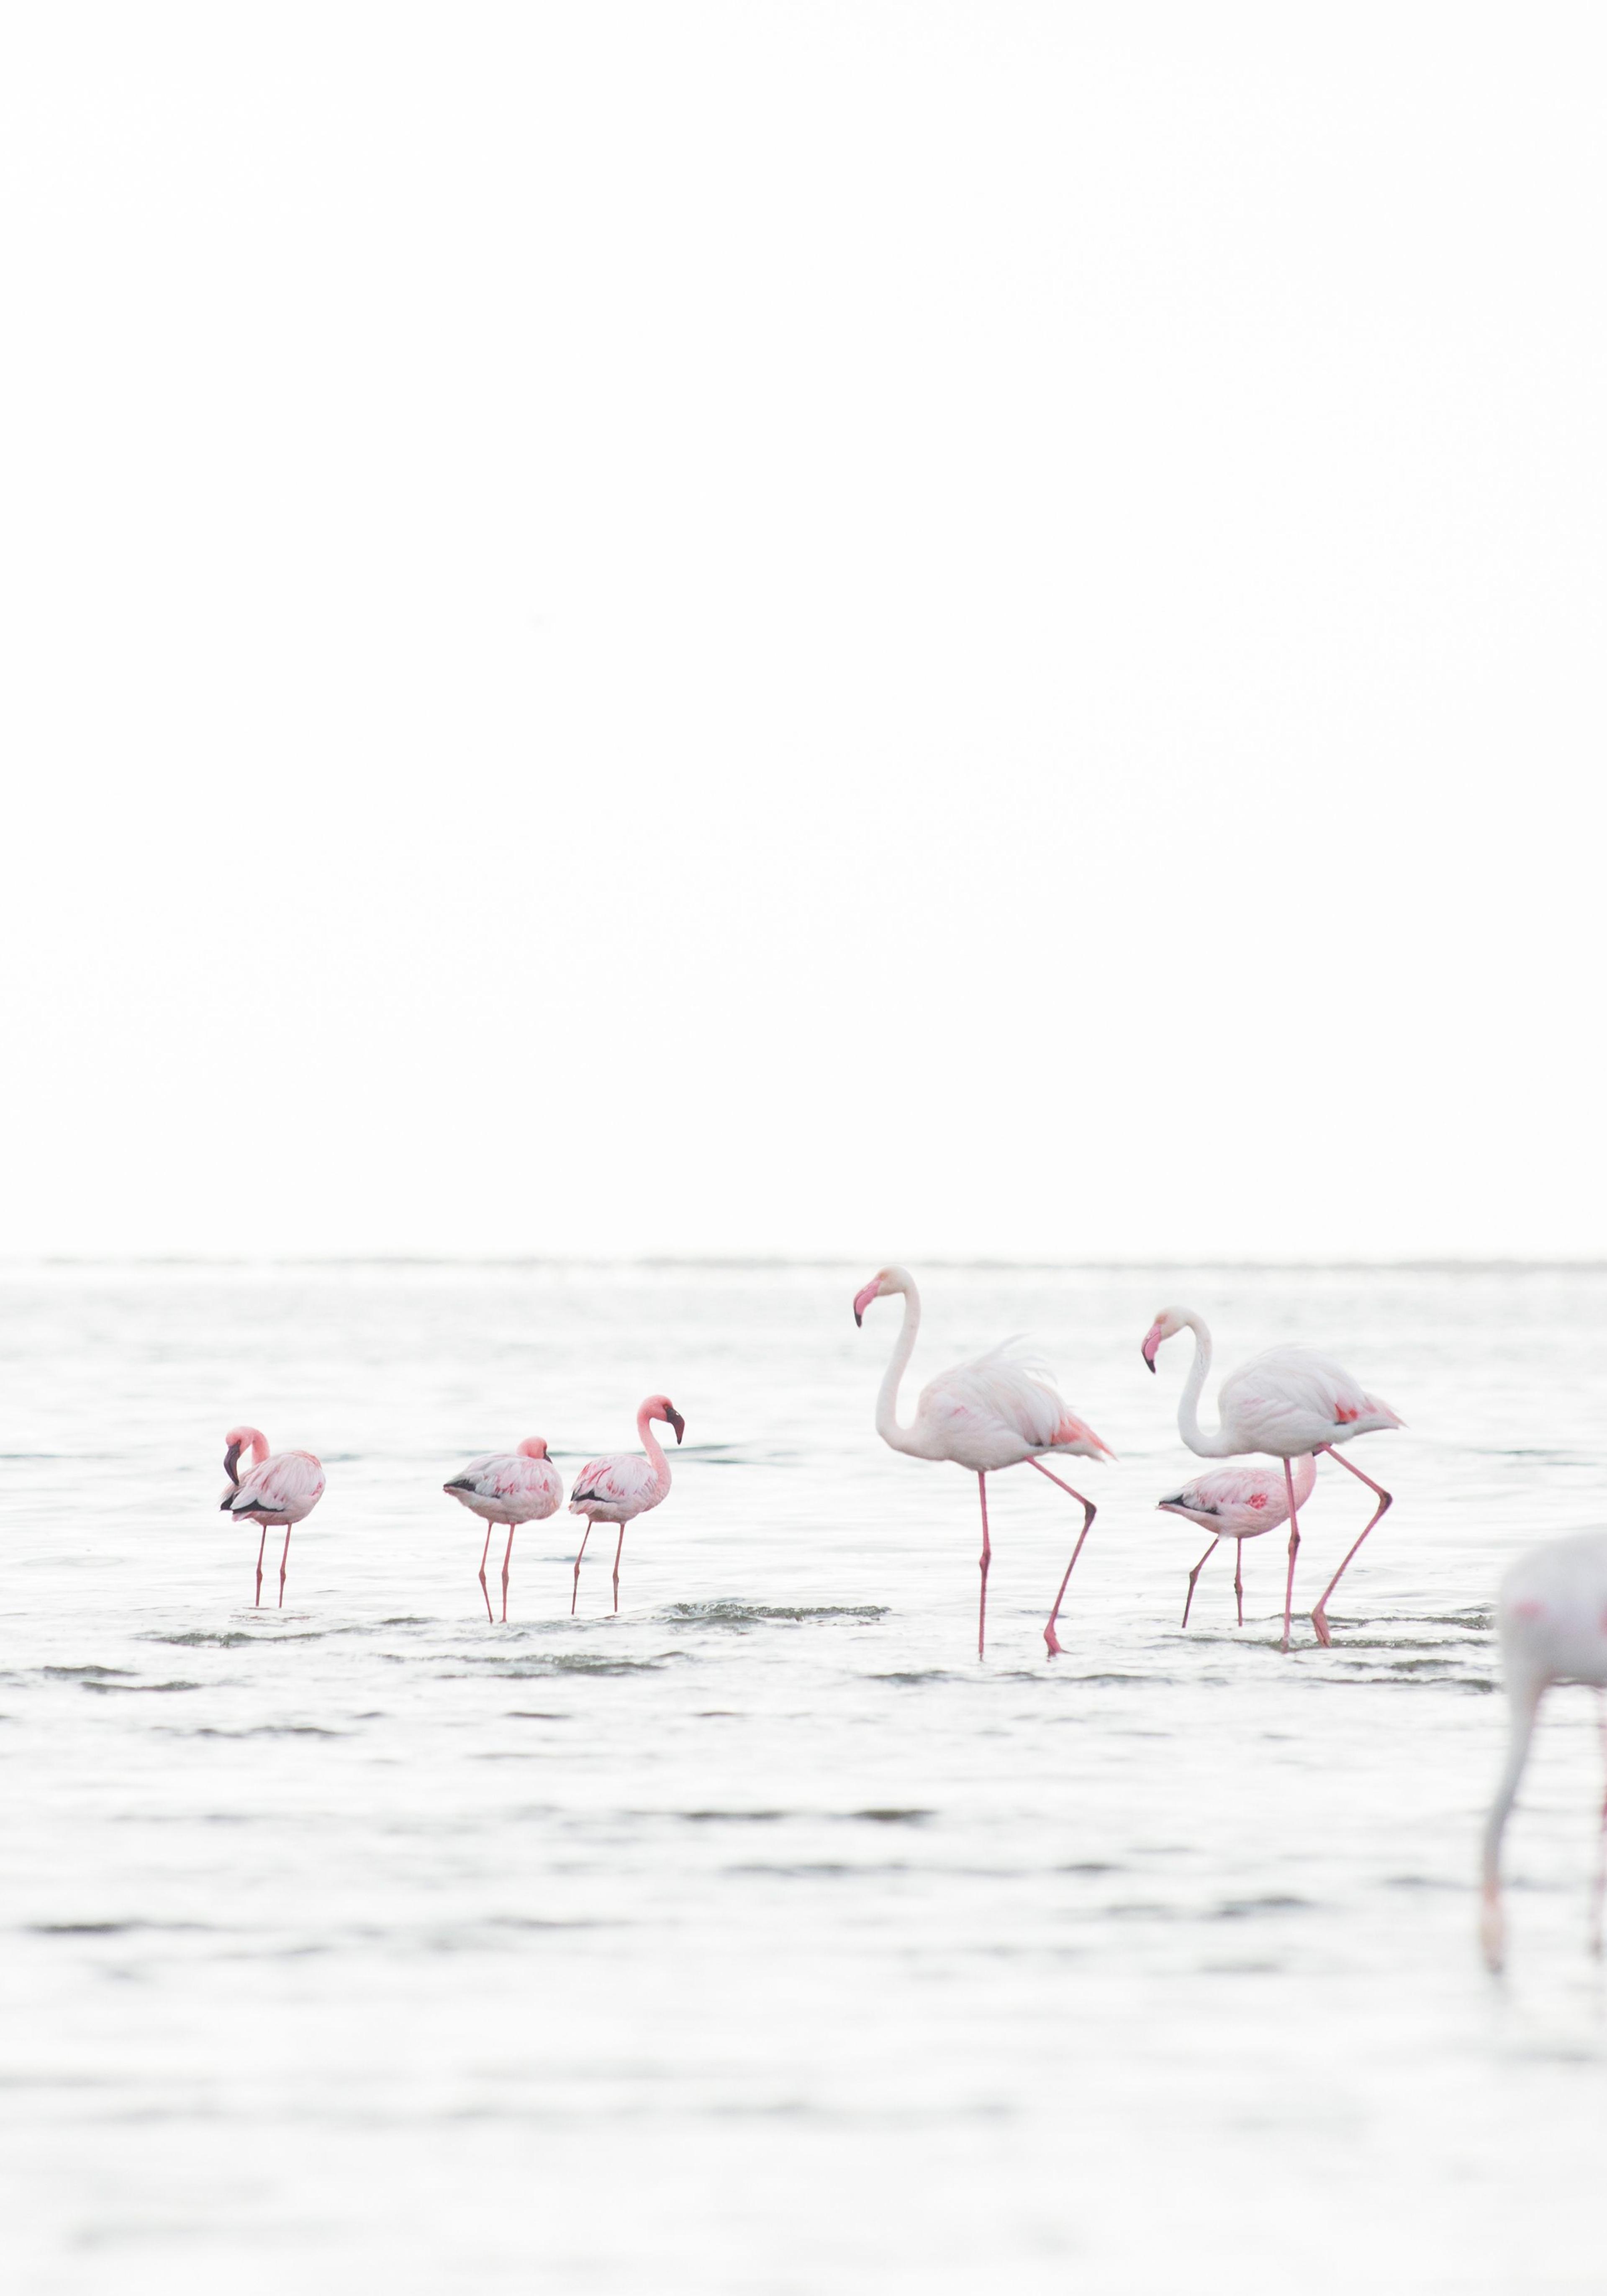 Plakat Flamingi 